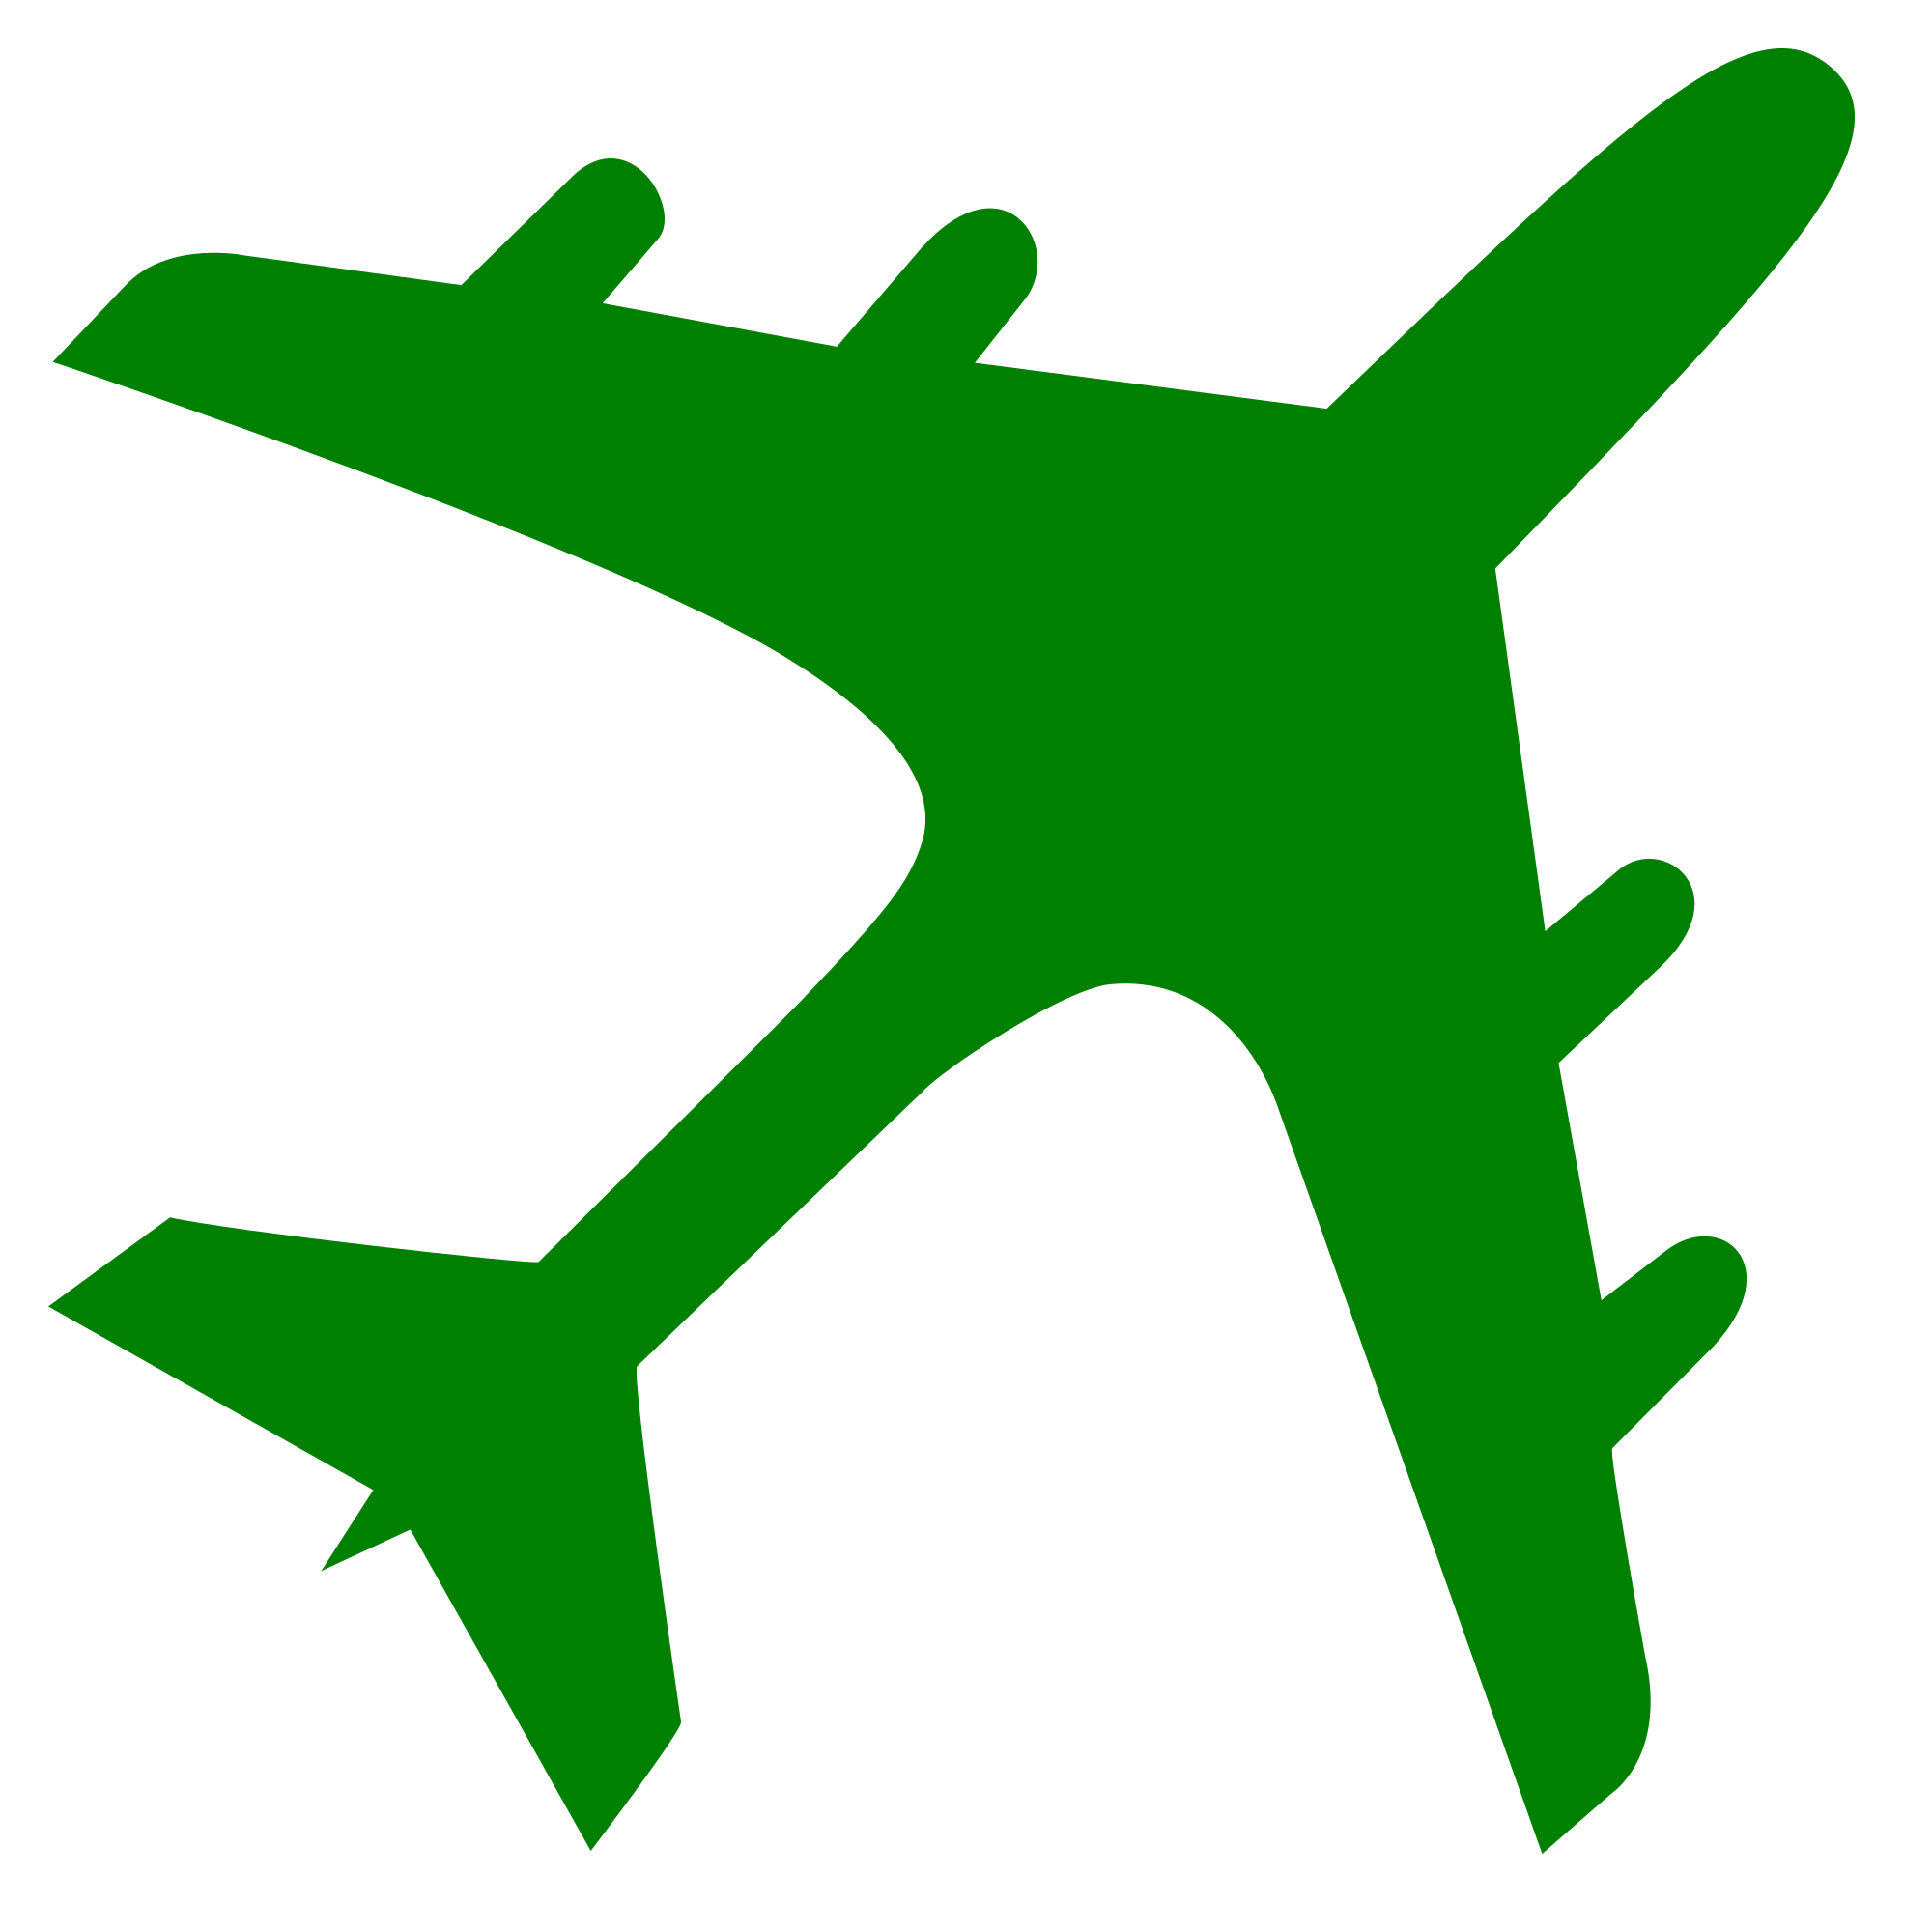 jet clipart green